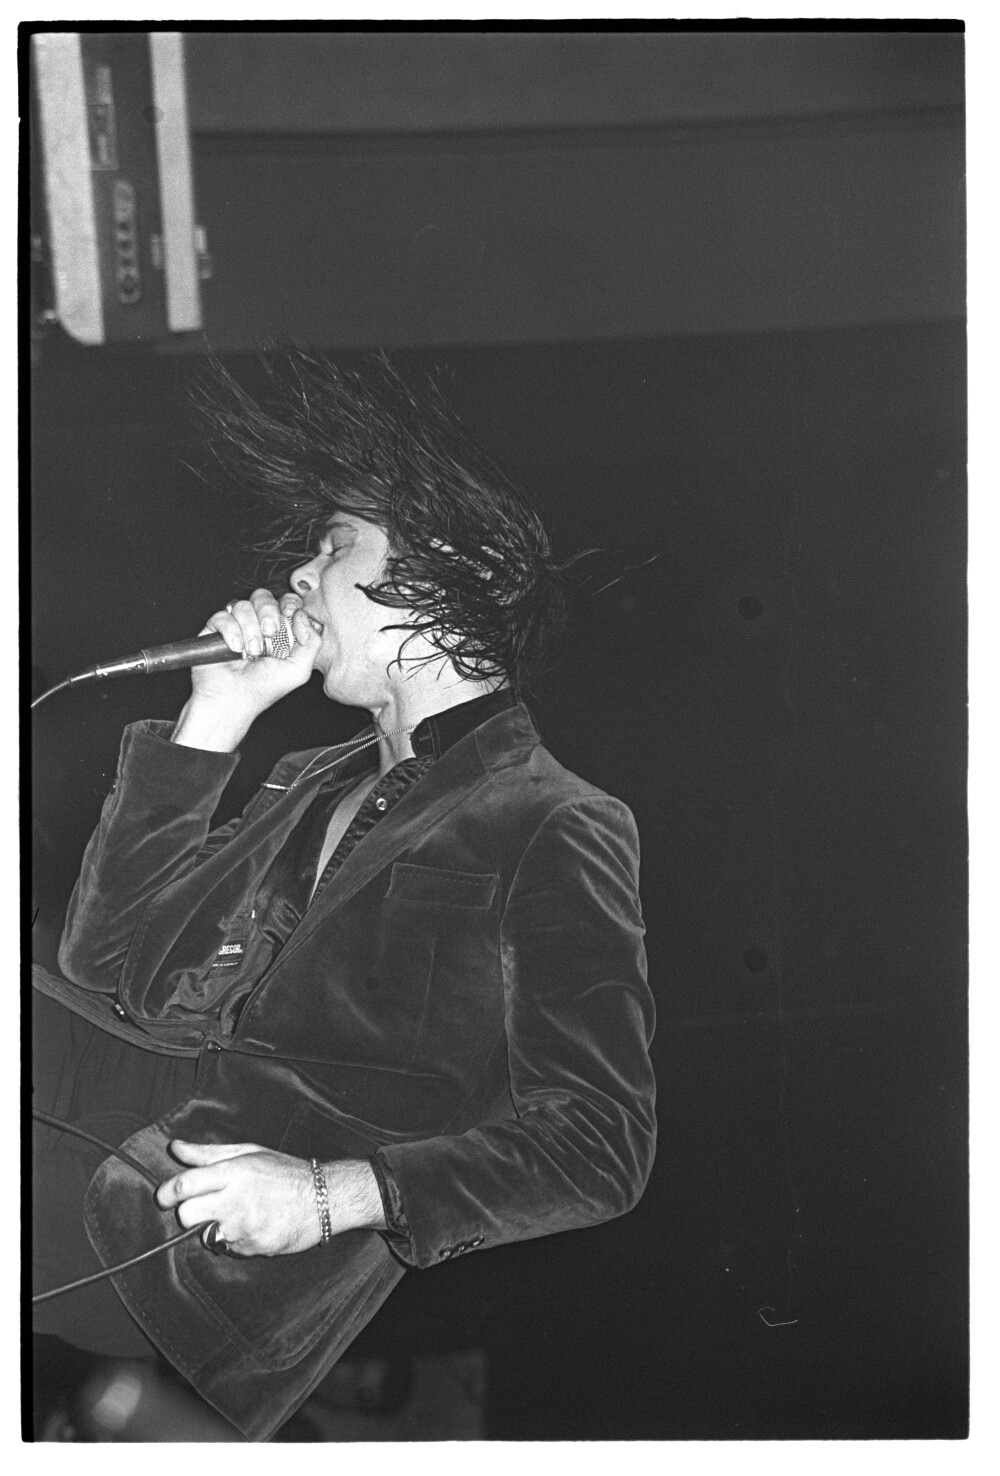 Nick Cave and the Bad Seeds 30.09.1986 I N 7 (Rita Maier / Schwules Museum Berlin RR-P)